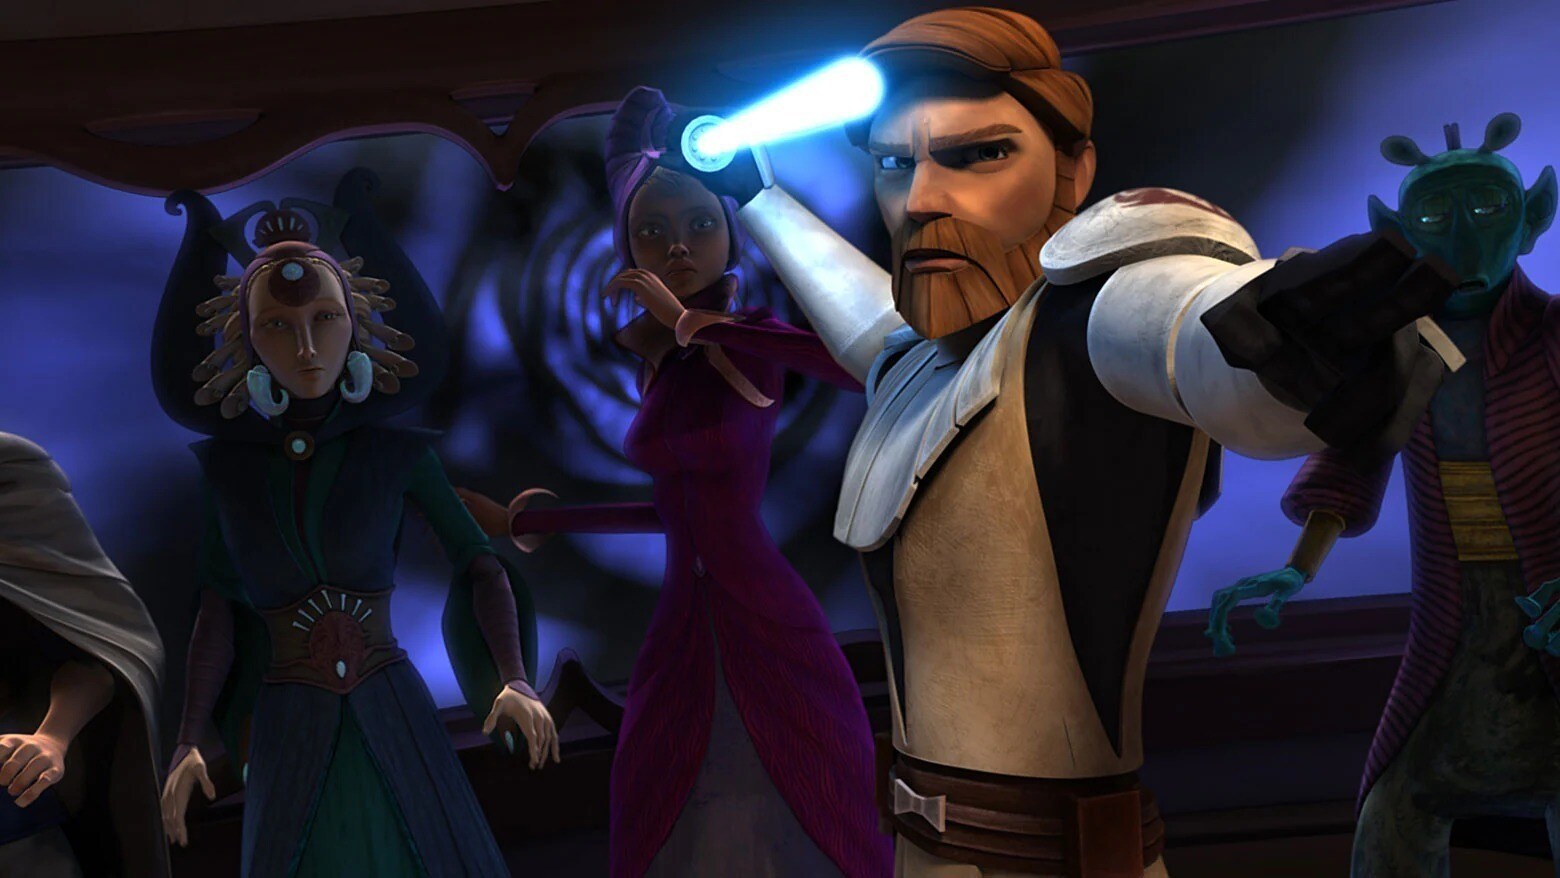 Obi-Wan Kenobi protects Duchess Satine